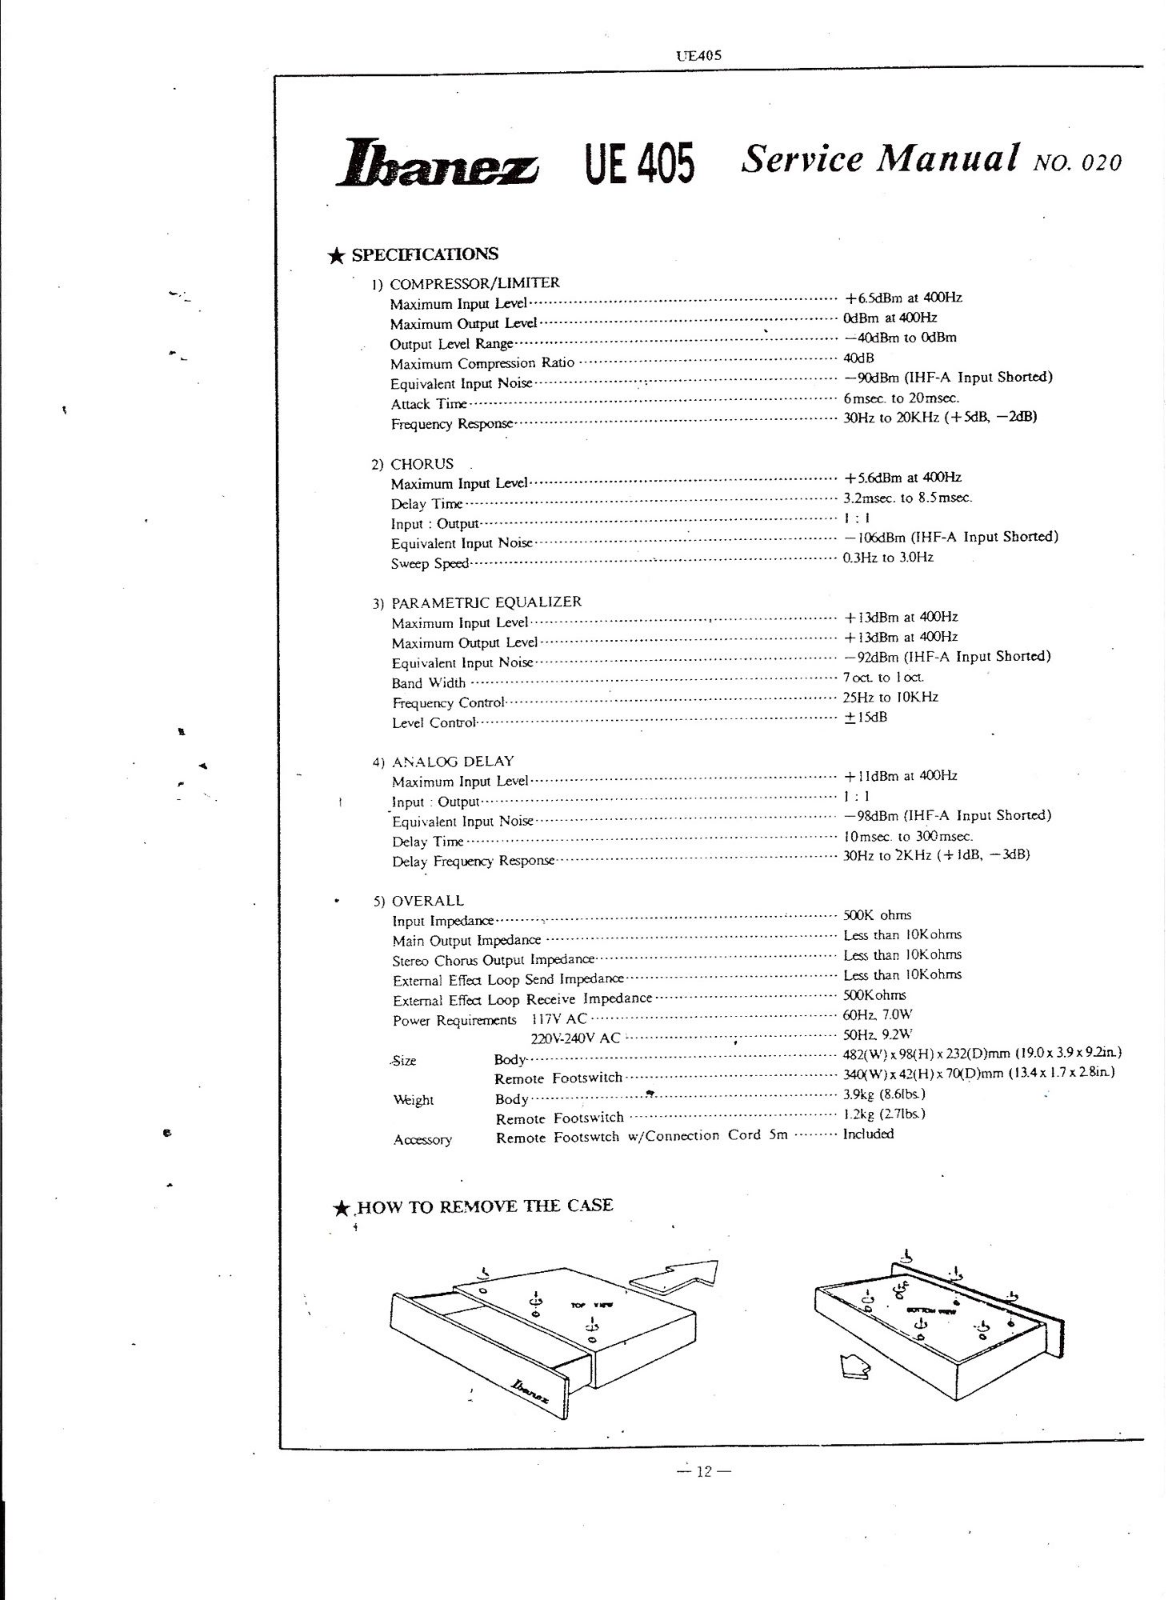 Ibanez UE405 Service manual